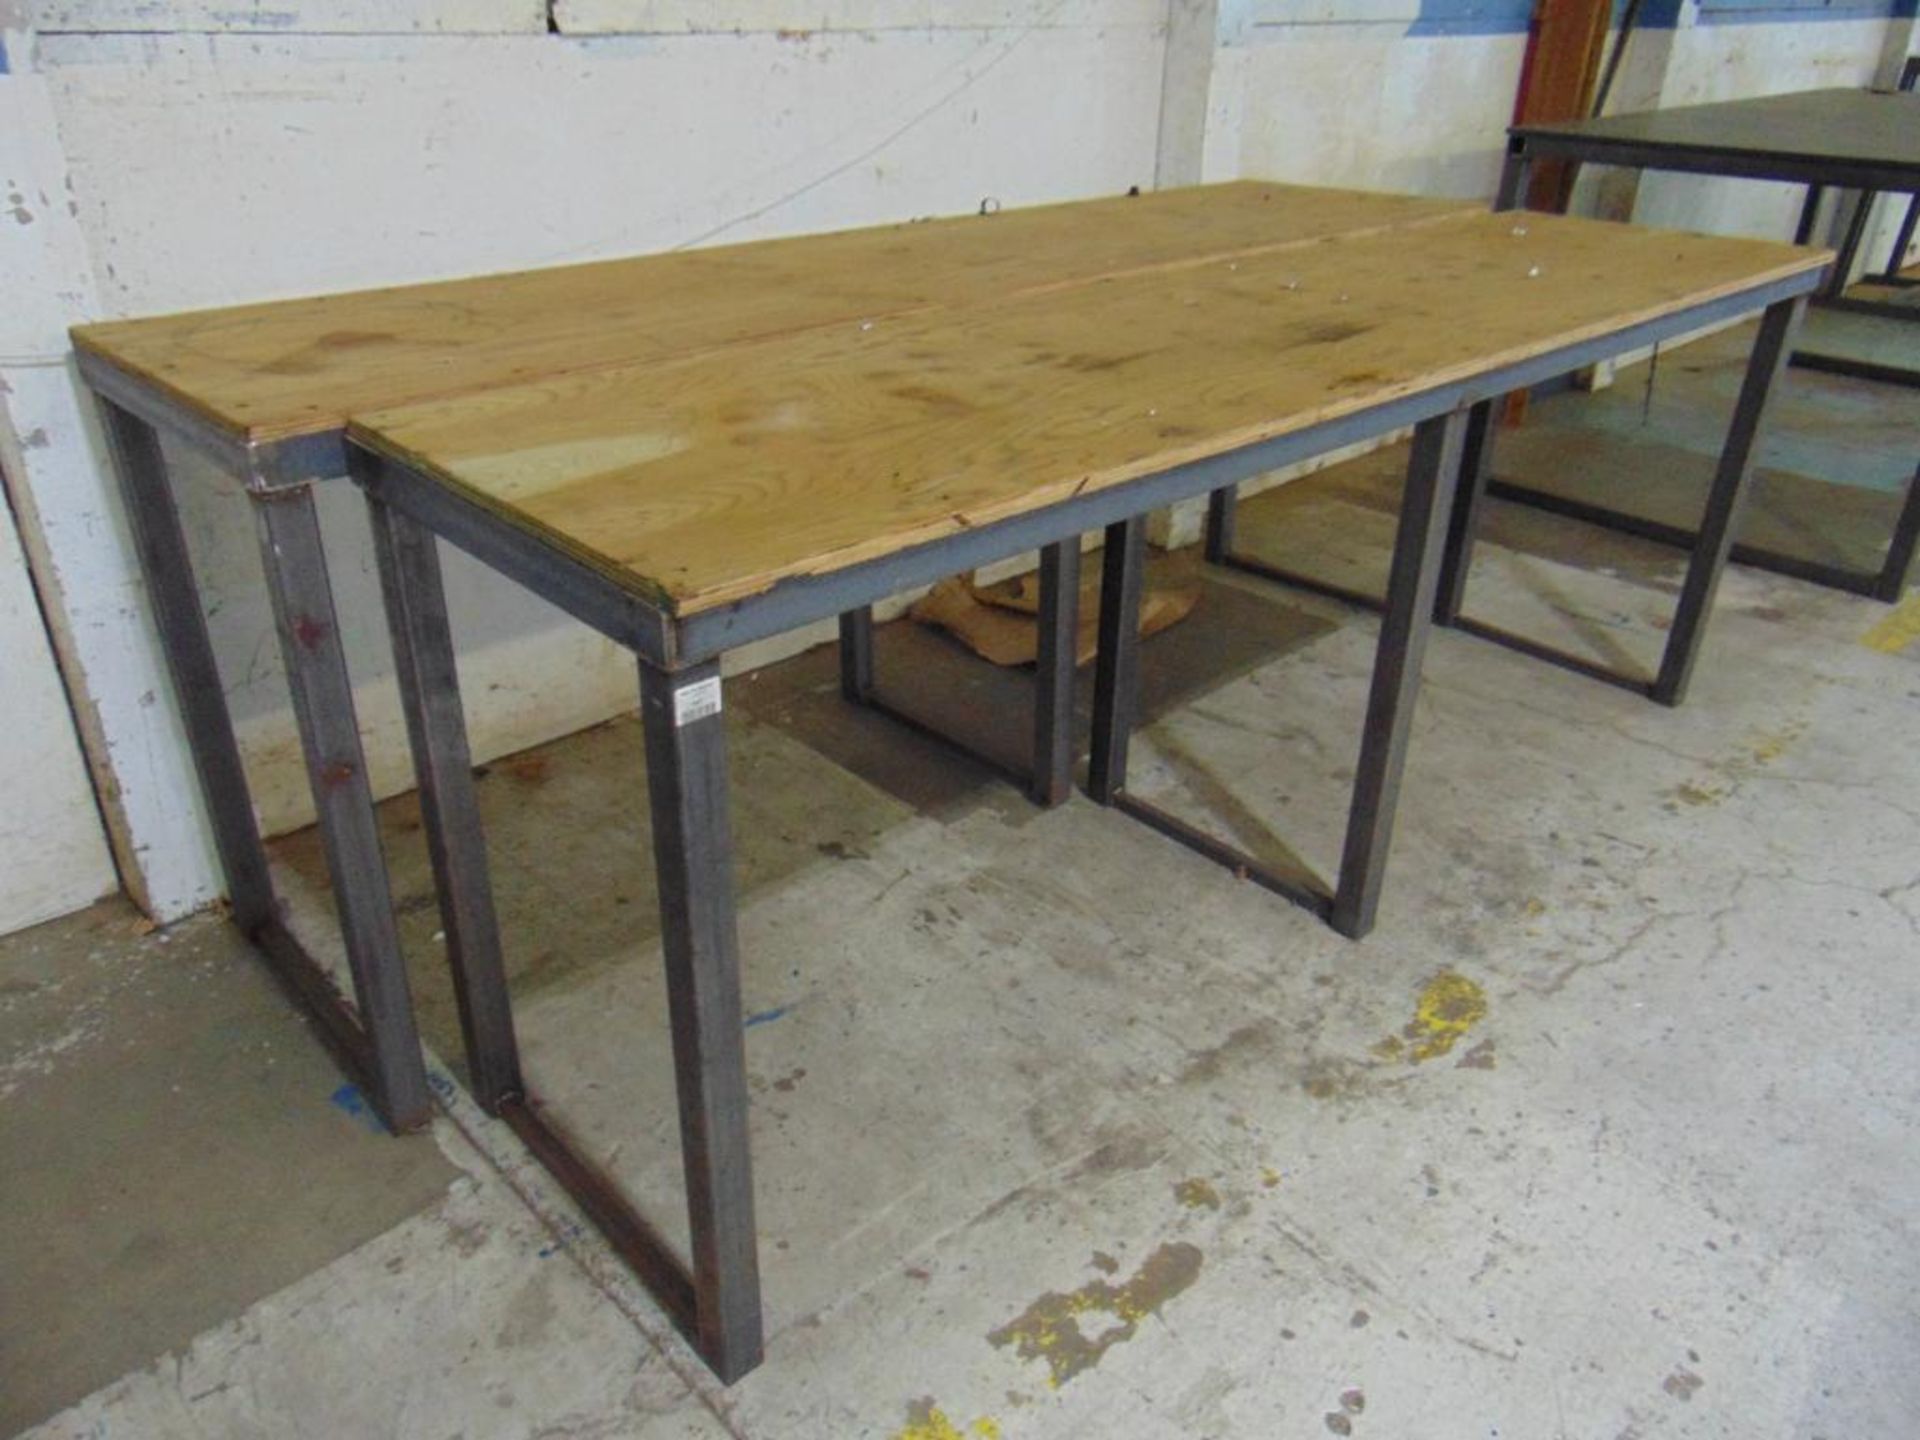 2 Steel Tables*